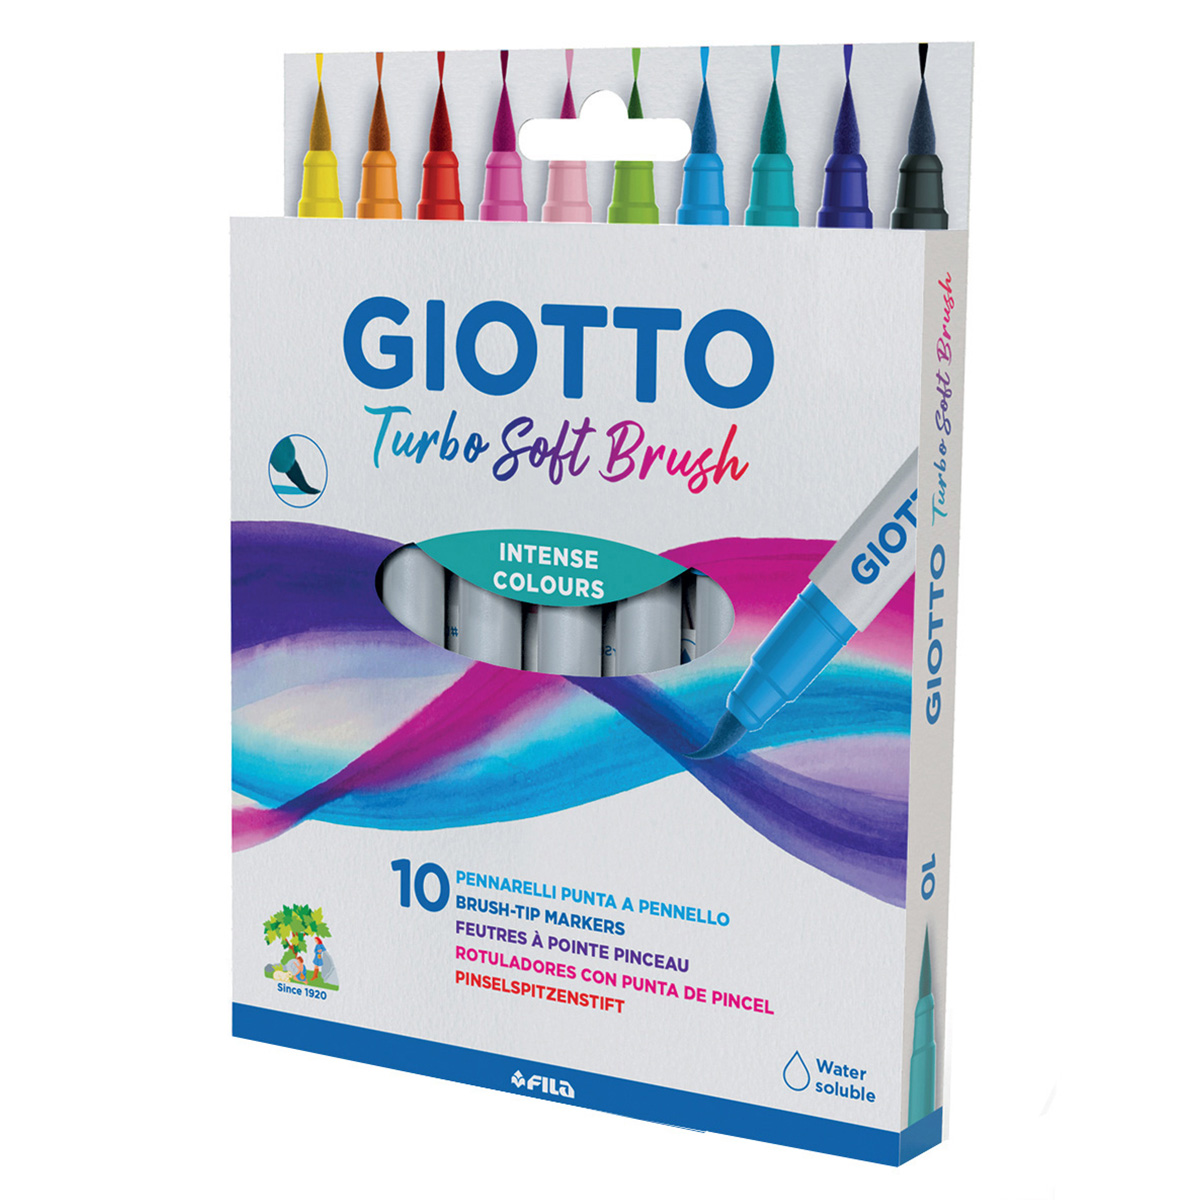 Rotuladores Giotto Turbo Soft Brush Estuche 10 uds.